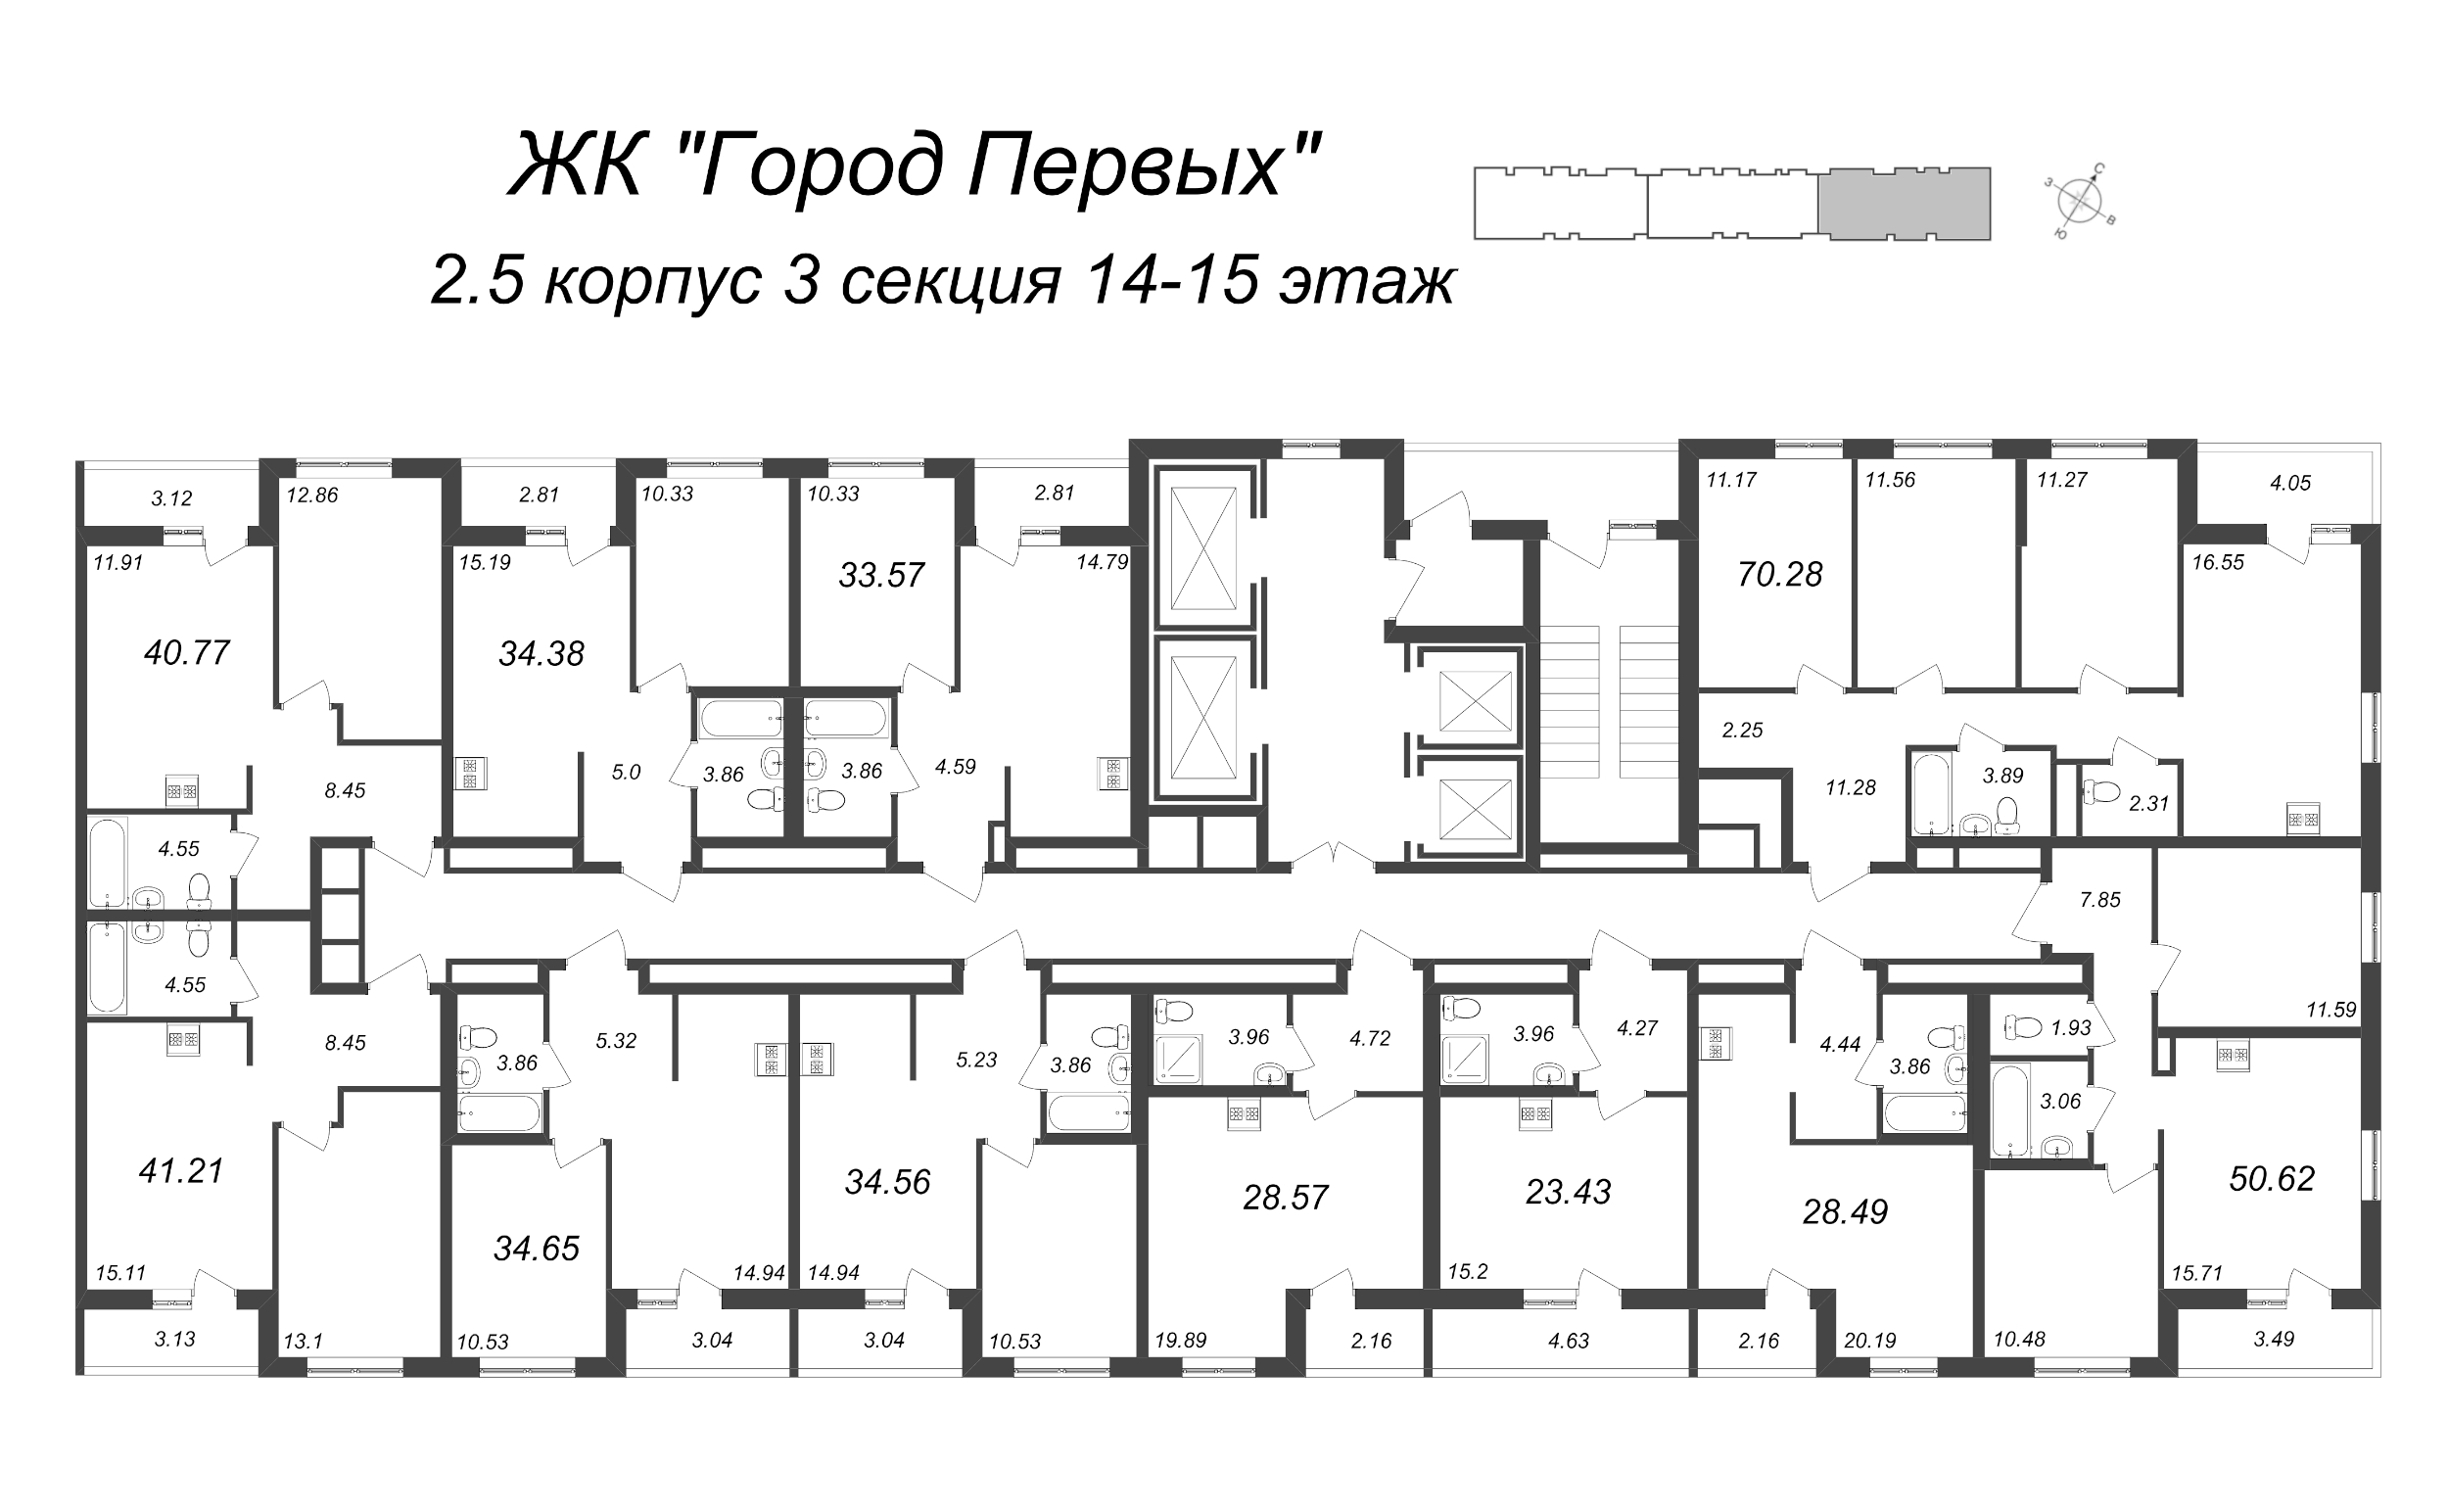 3-комнатная (Евро) квартира, 50.62 м² - планировка этажа